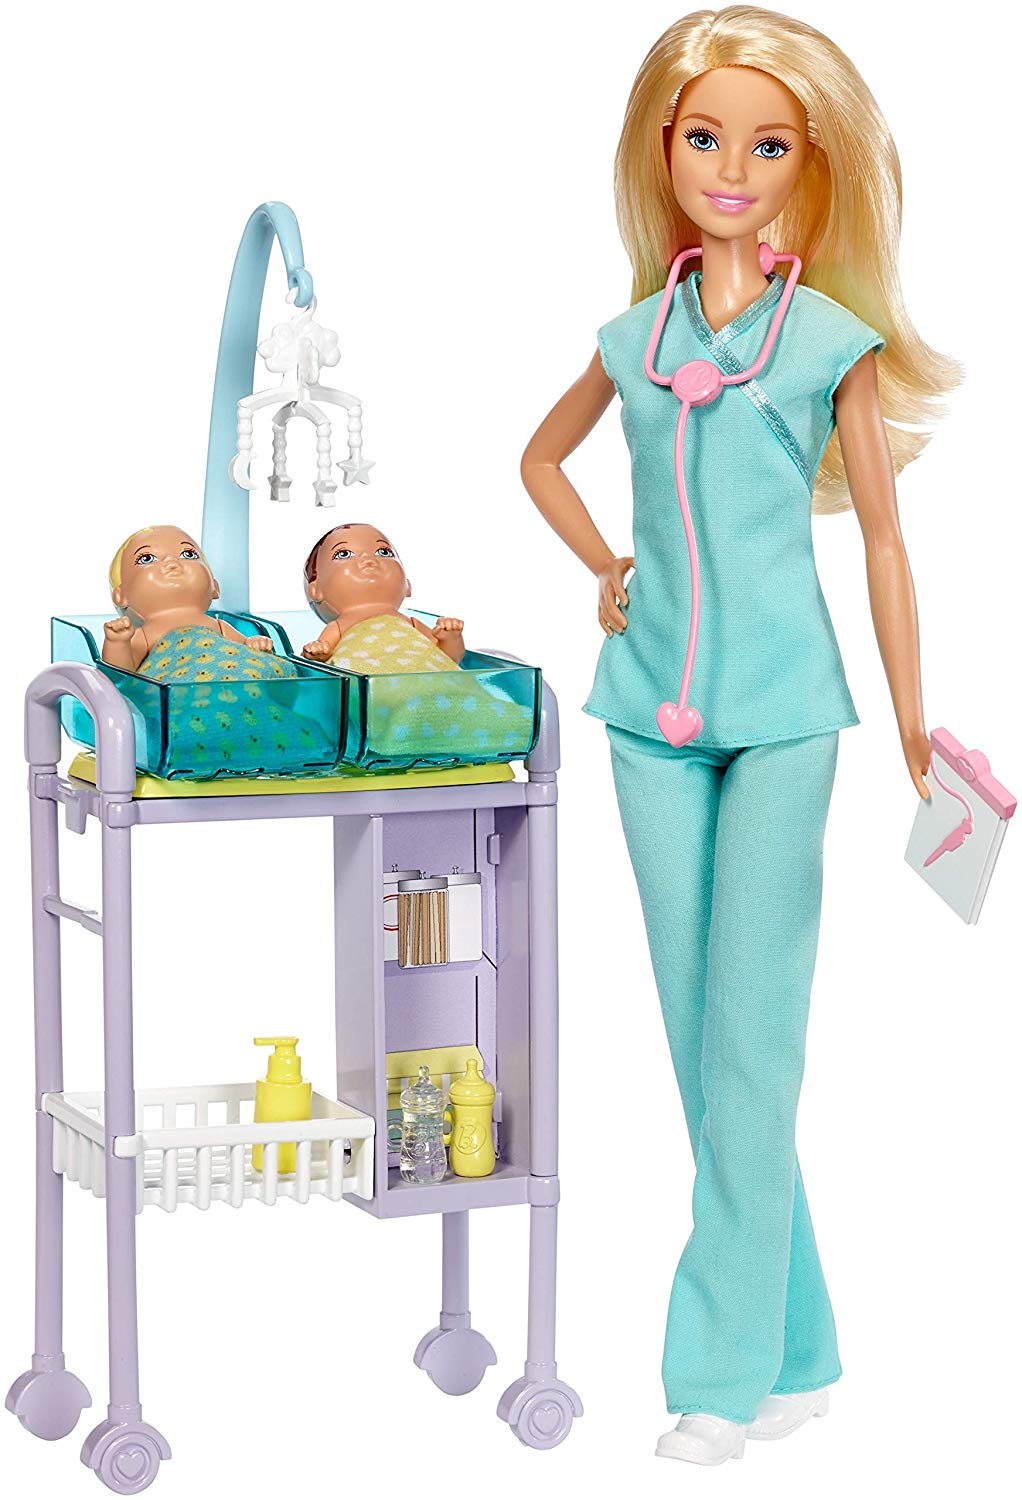 Featured image of post Barbie Imagenes De Juguetes Contacta en pedidos juguettos es si tienes alg n problema